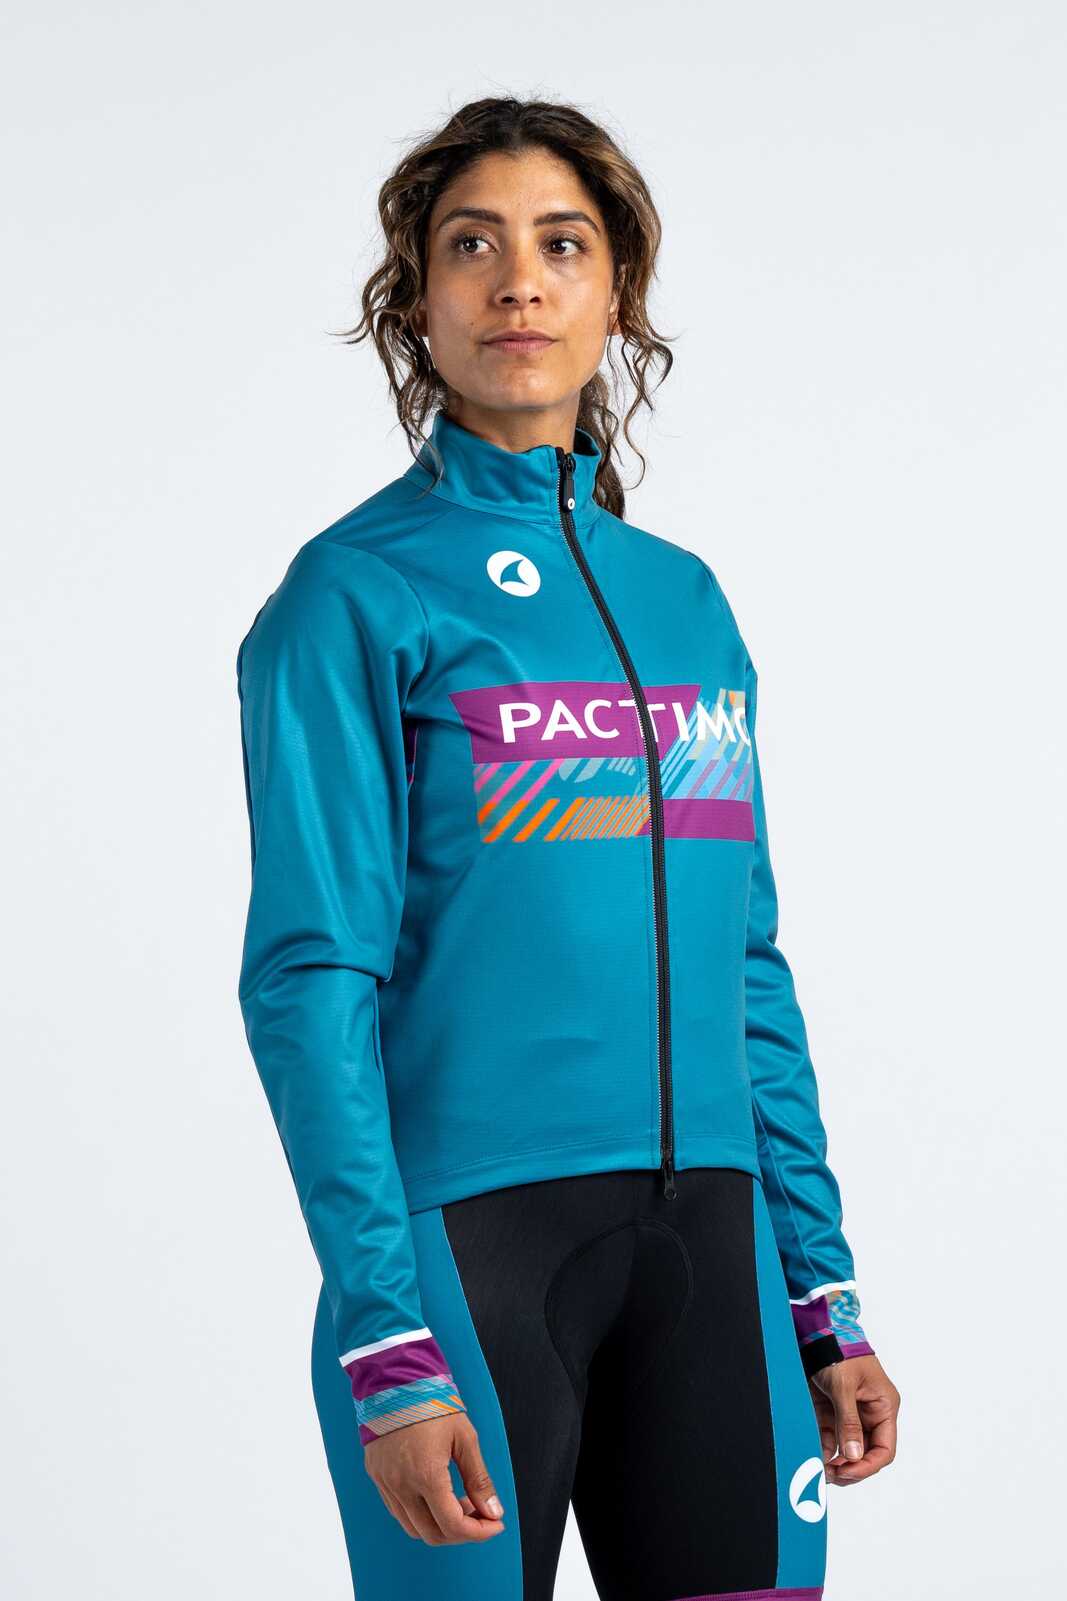 Women's Custom Cycling Jacket - Alpine Front View